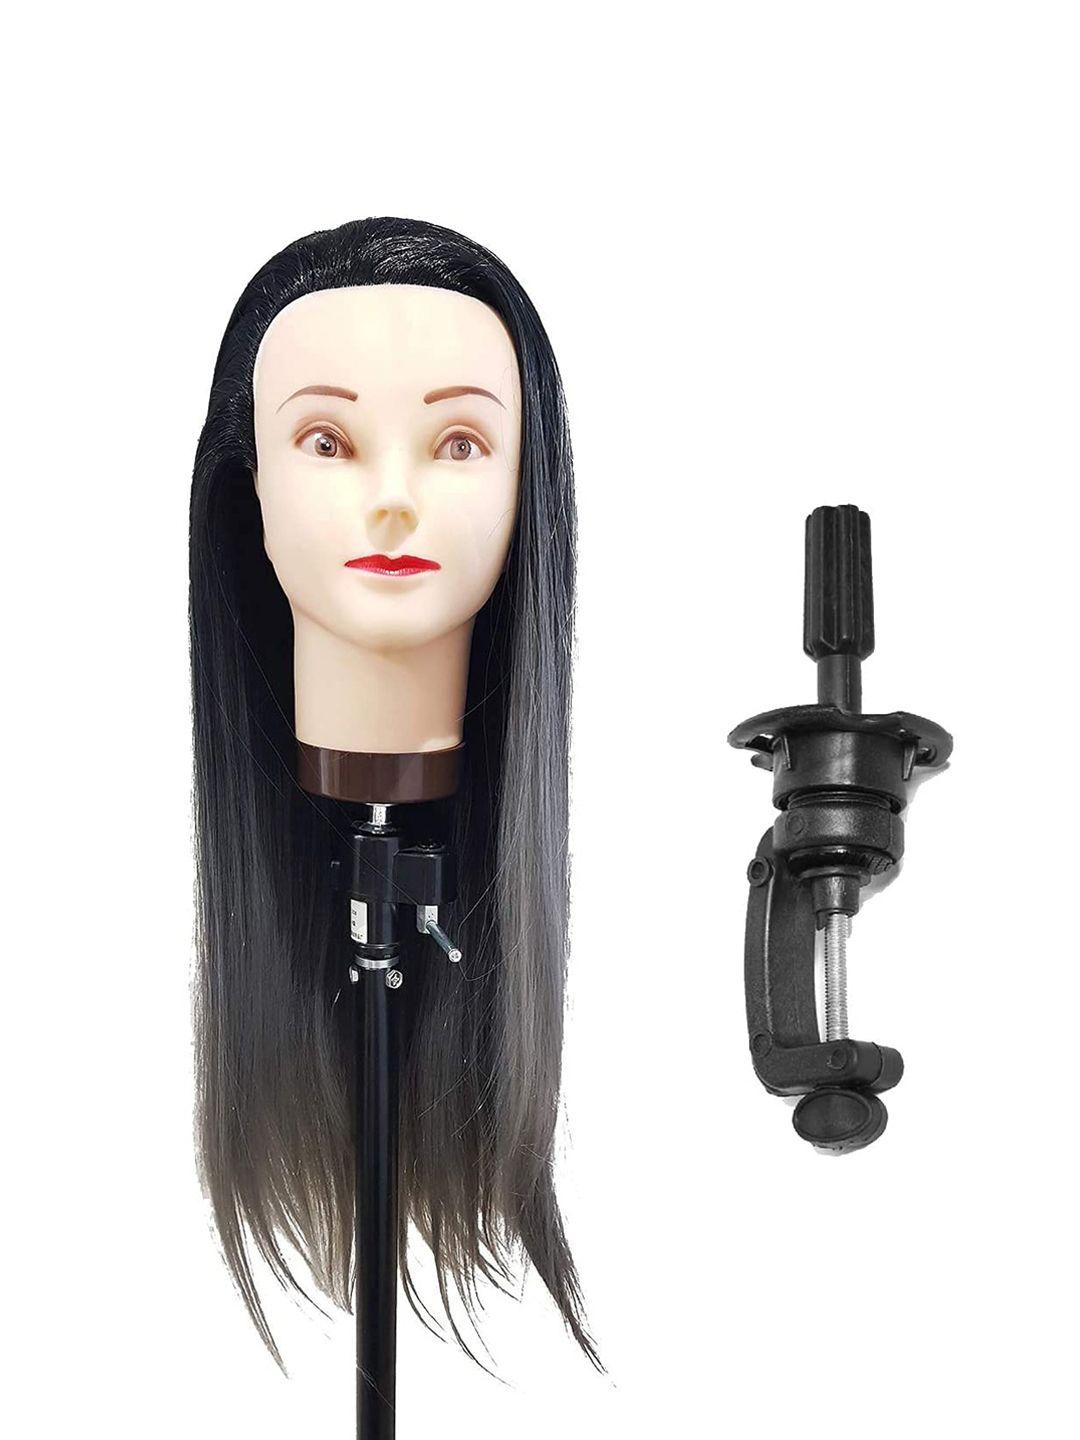 chronex professional hair styling mannequin hair dummy for cutting & braiding